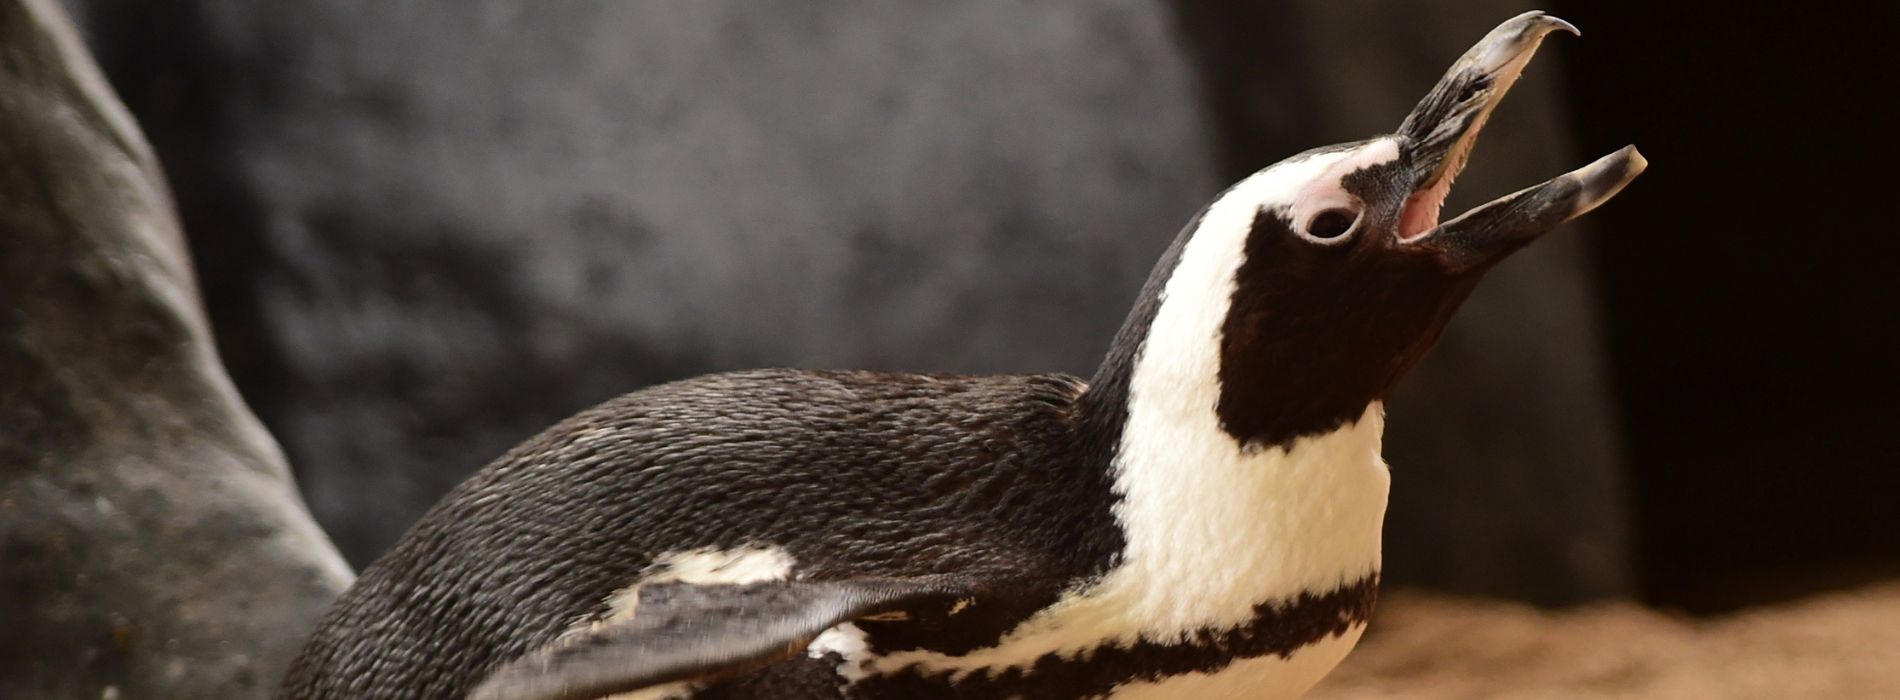 Why do penguins honk?